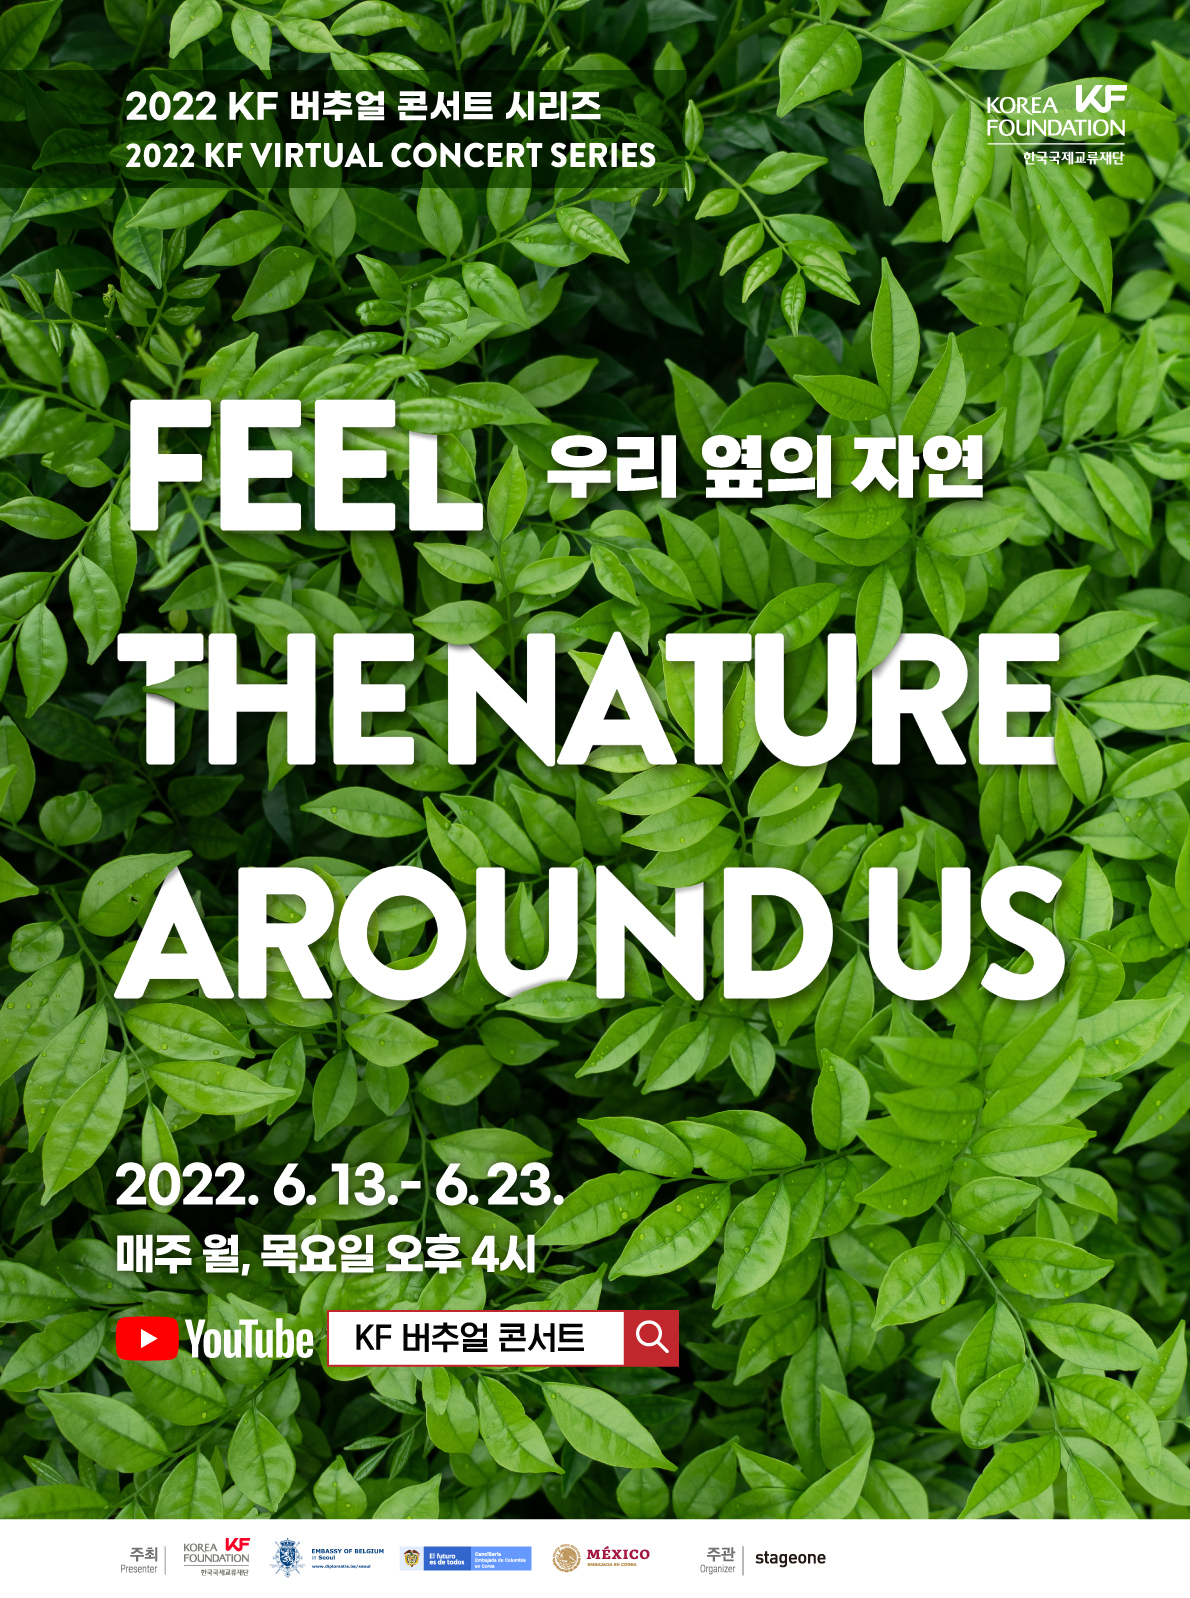 2022 KF Virtual Concert Series “Feel the Nature Around Us”